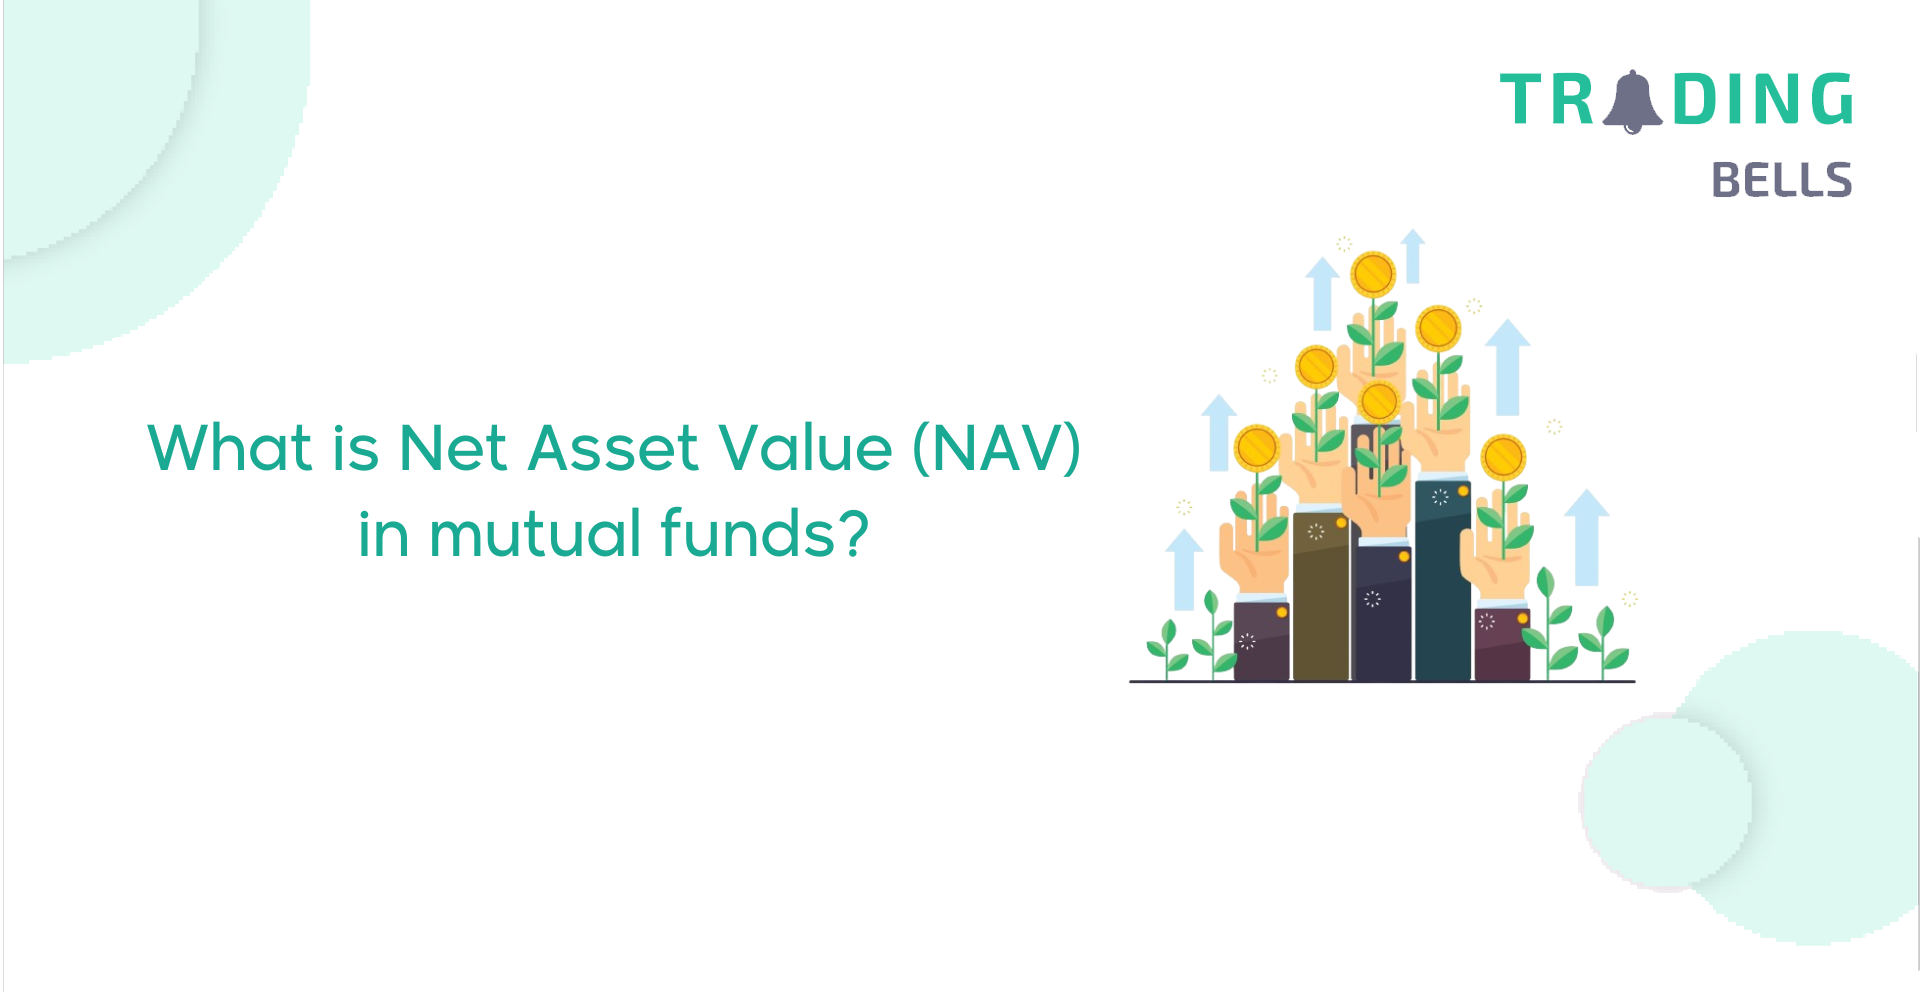 Net Asset Value (NAV) in mutual funds